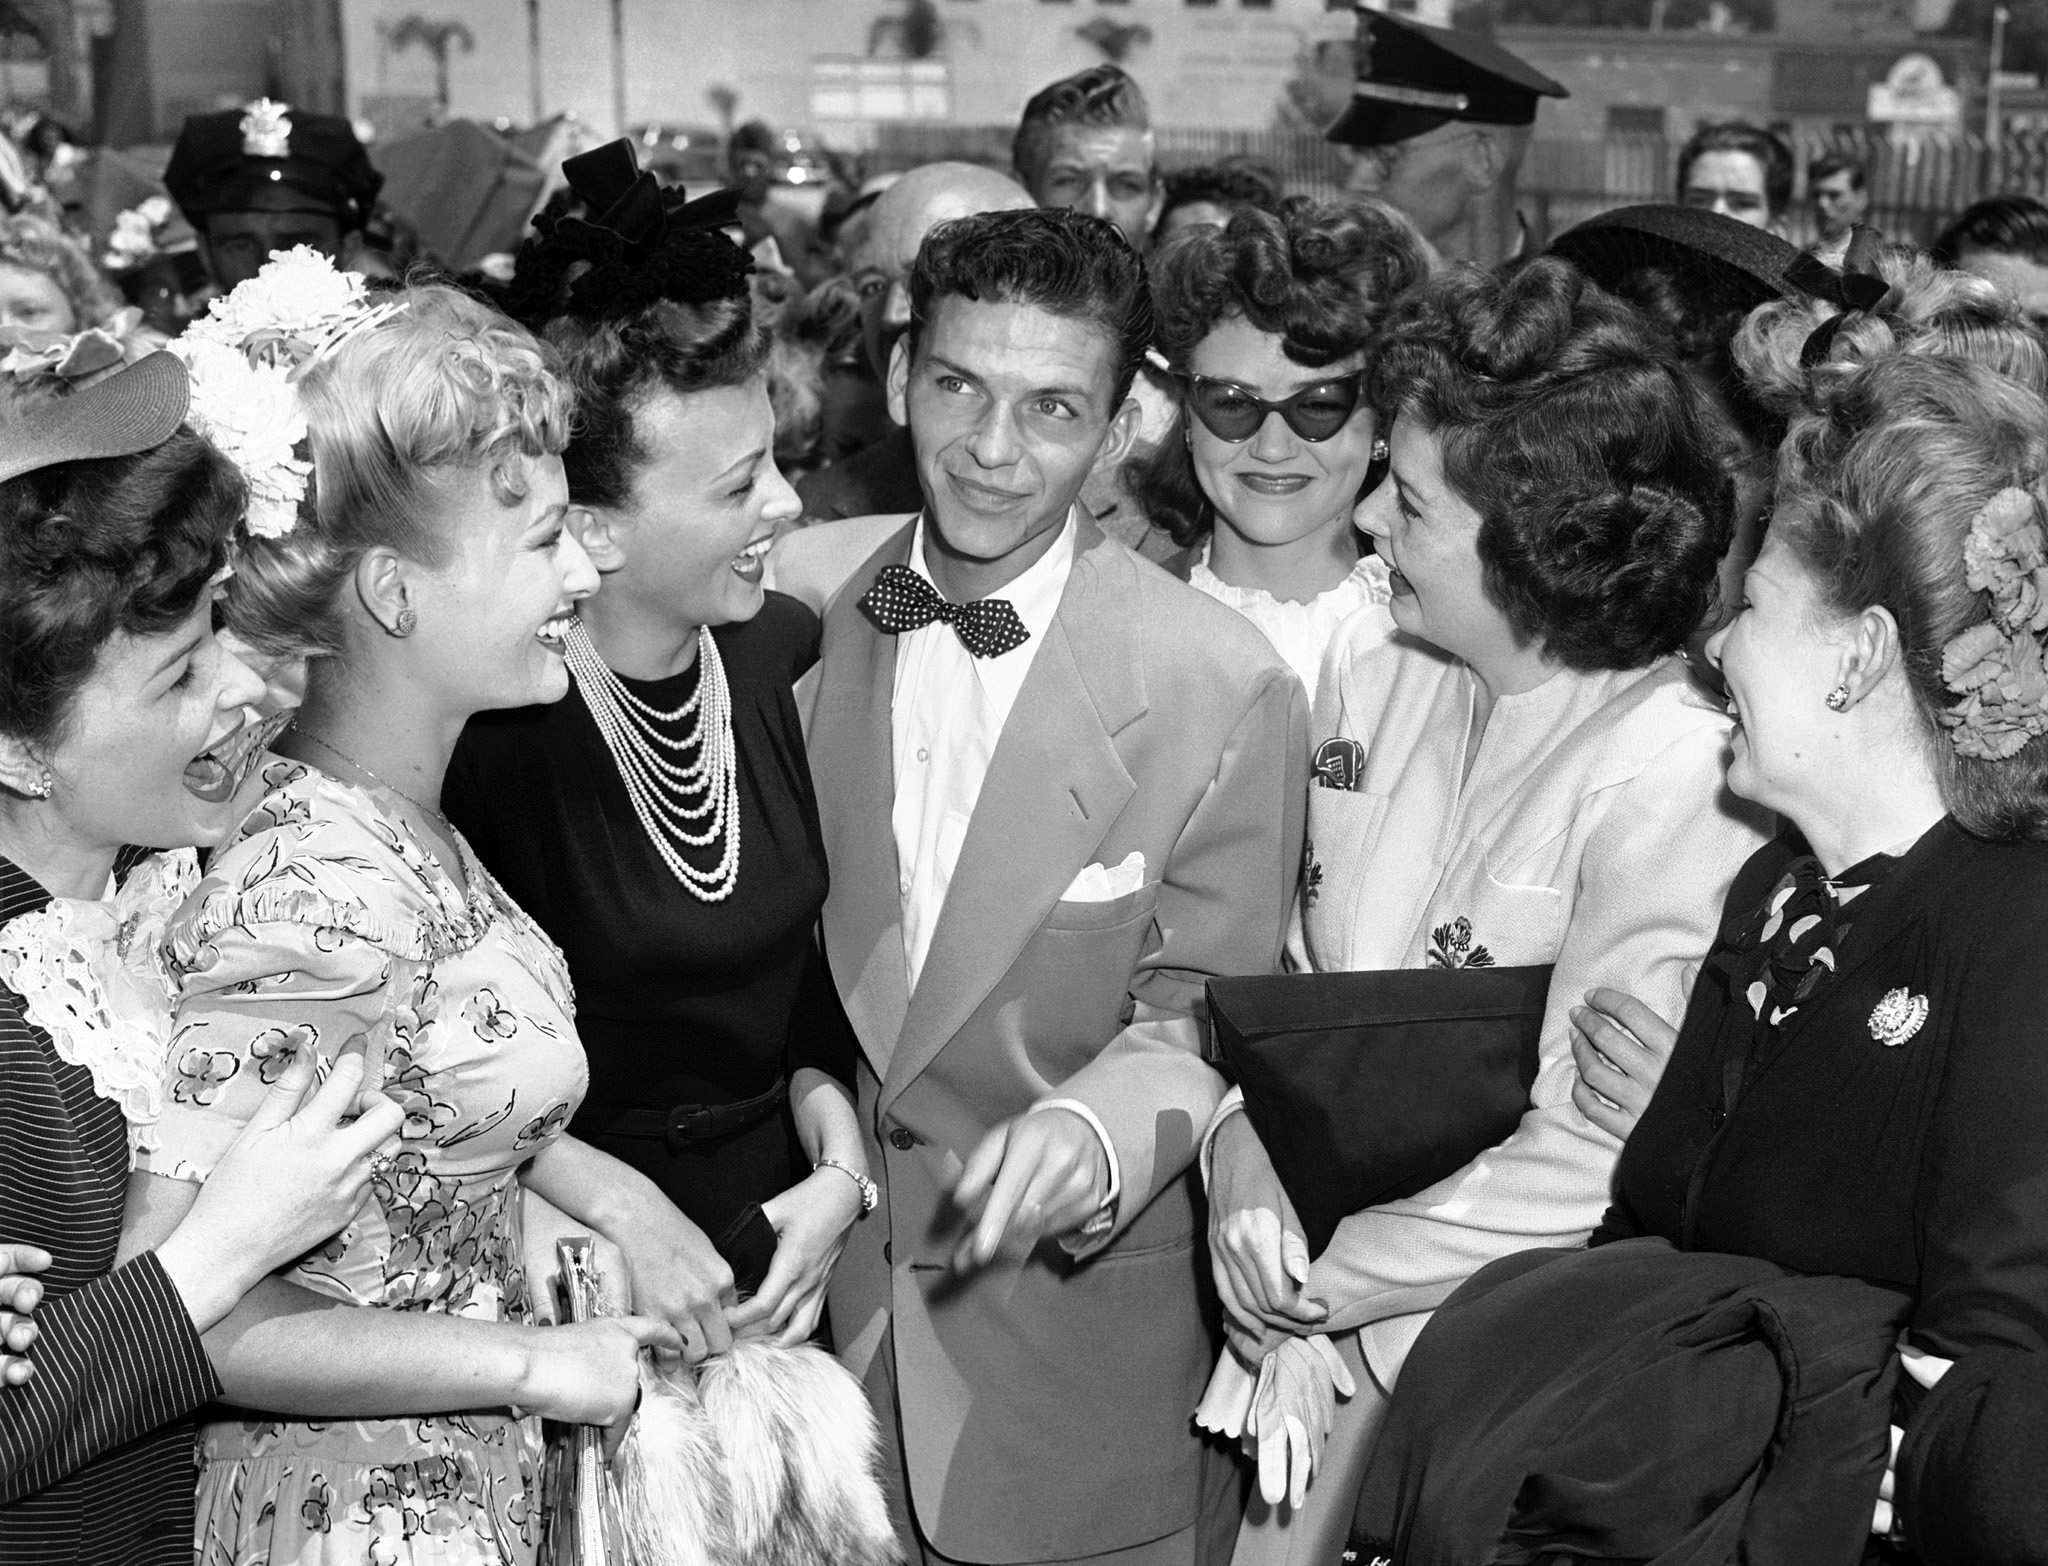 with lady fans Pasadena (1943-08-11 AP photo).jpg - Wikimedia Commons